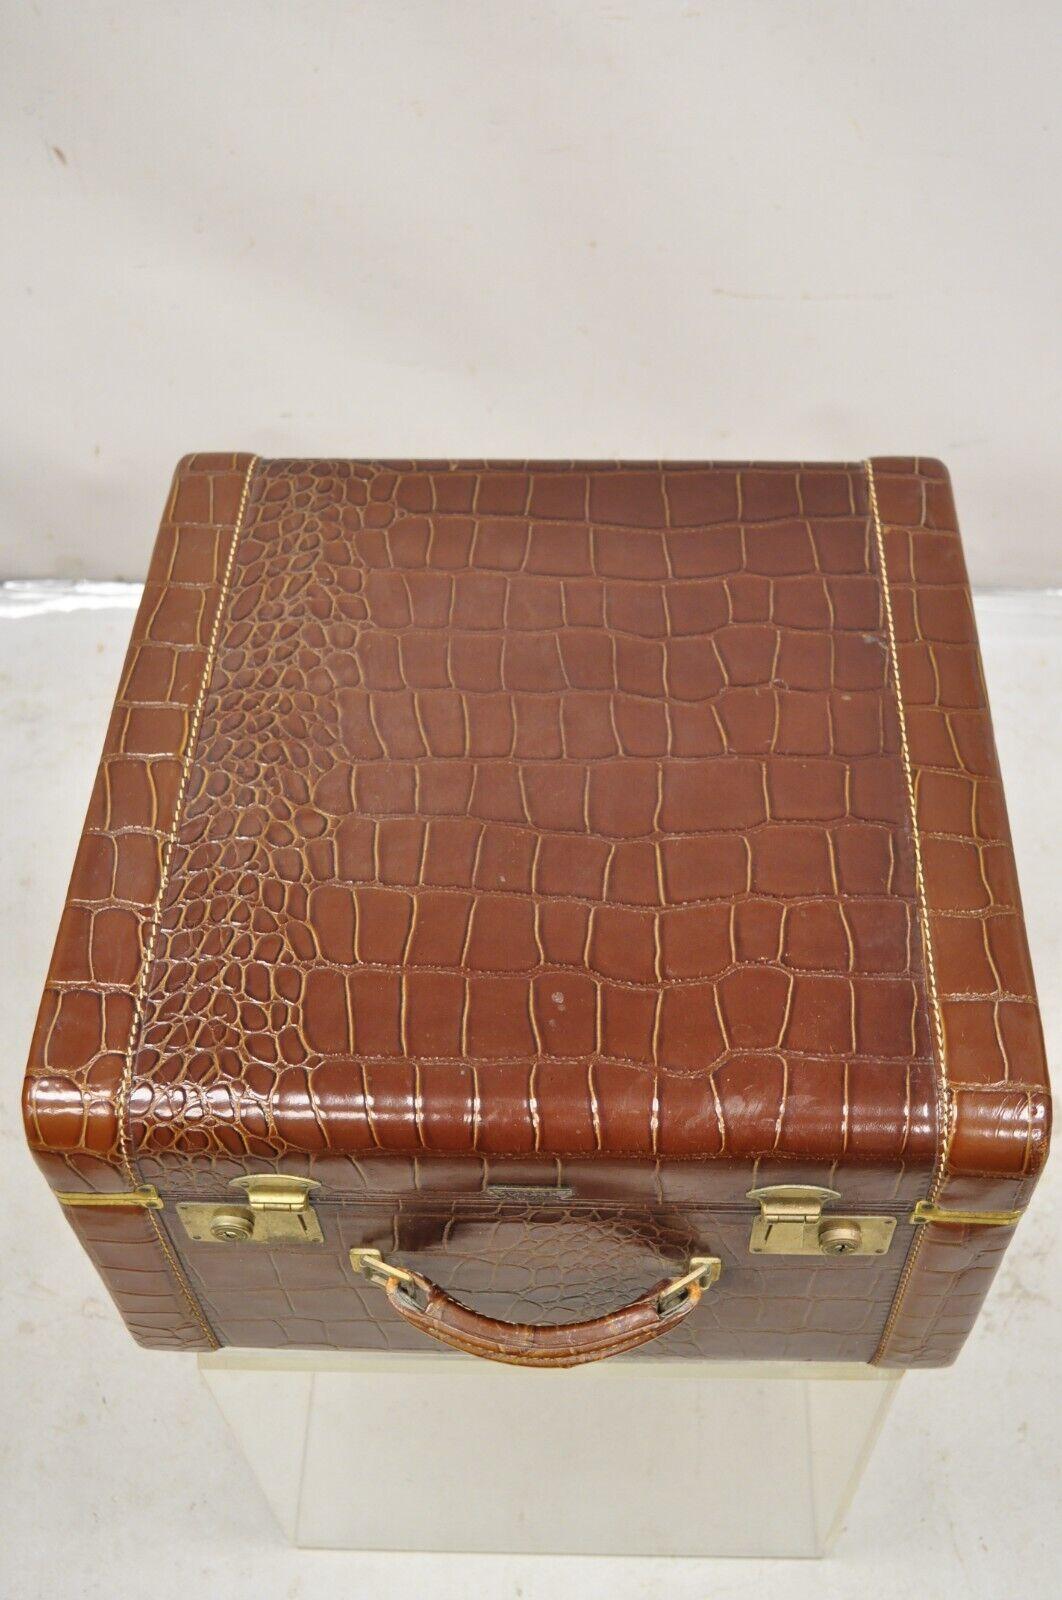 20th Century Coronet Spelrein Brown Top Grain Cowhide Leather Croc Print Suitcase Hat Trunk